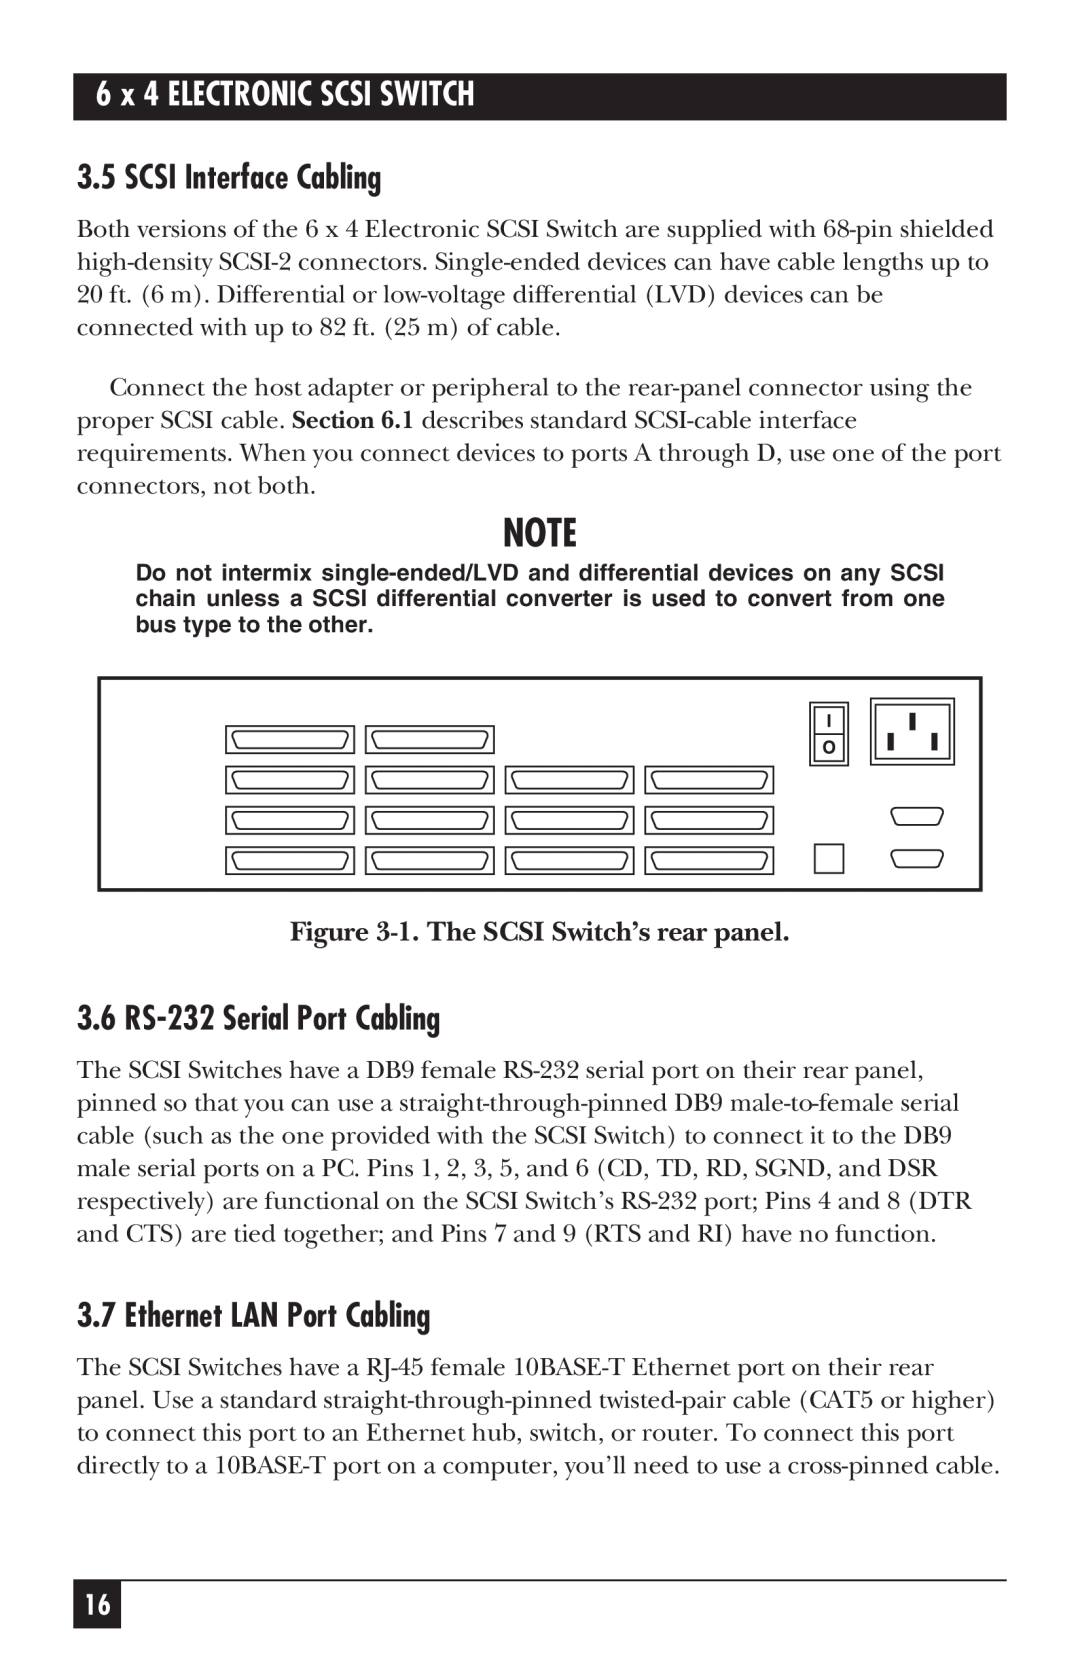 Black Box SW487A-R2 manual SCSI Interface Cabling, 3.6 RS-232 Serial Port Cabling, Ethernet LAN Port Cabling 